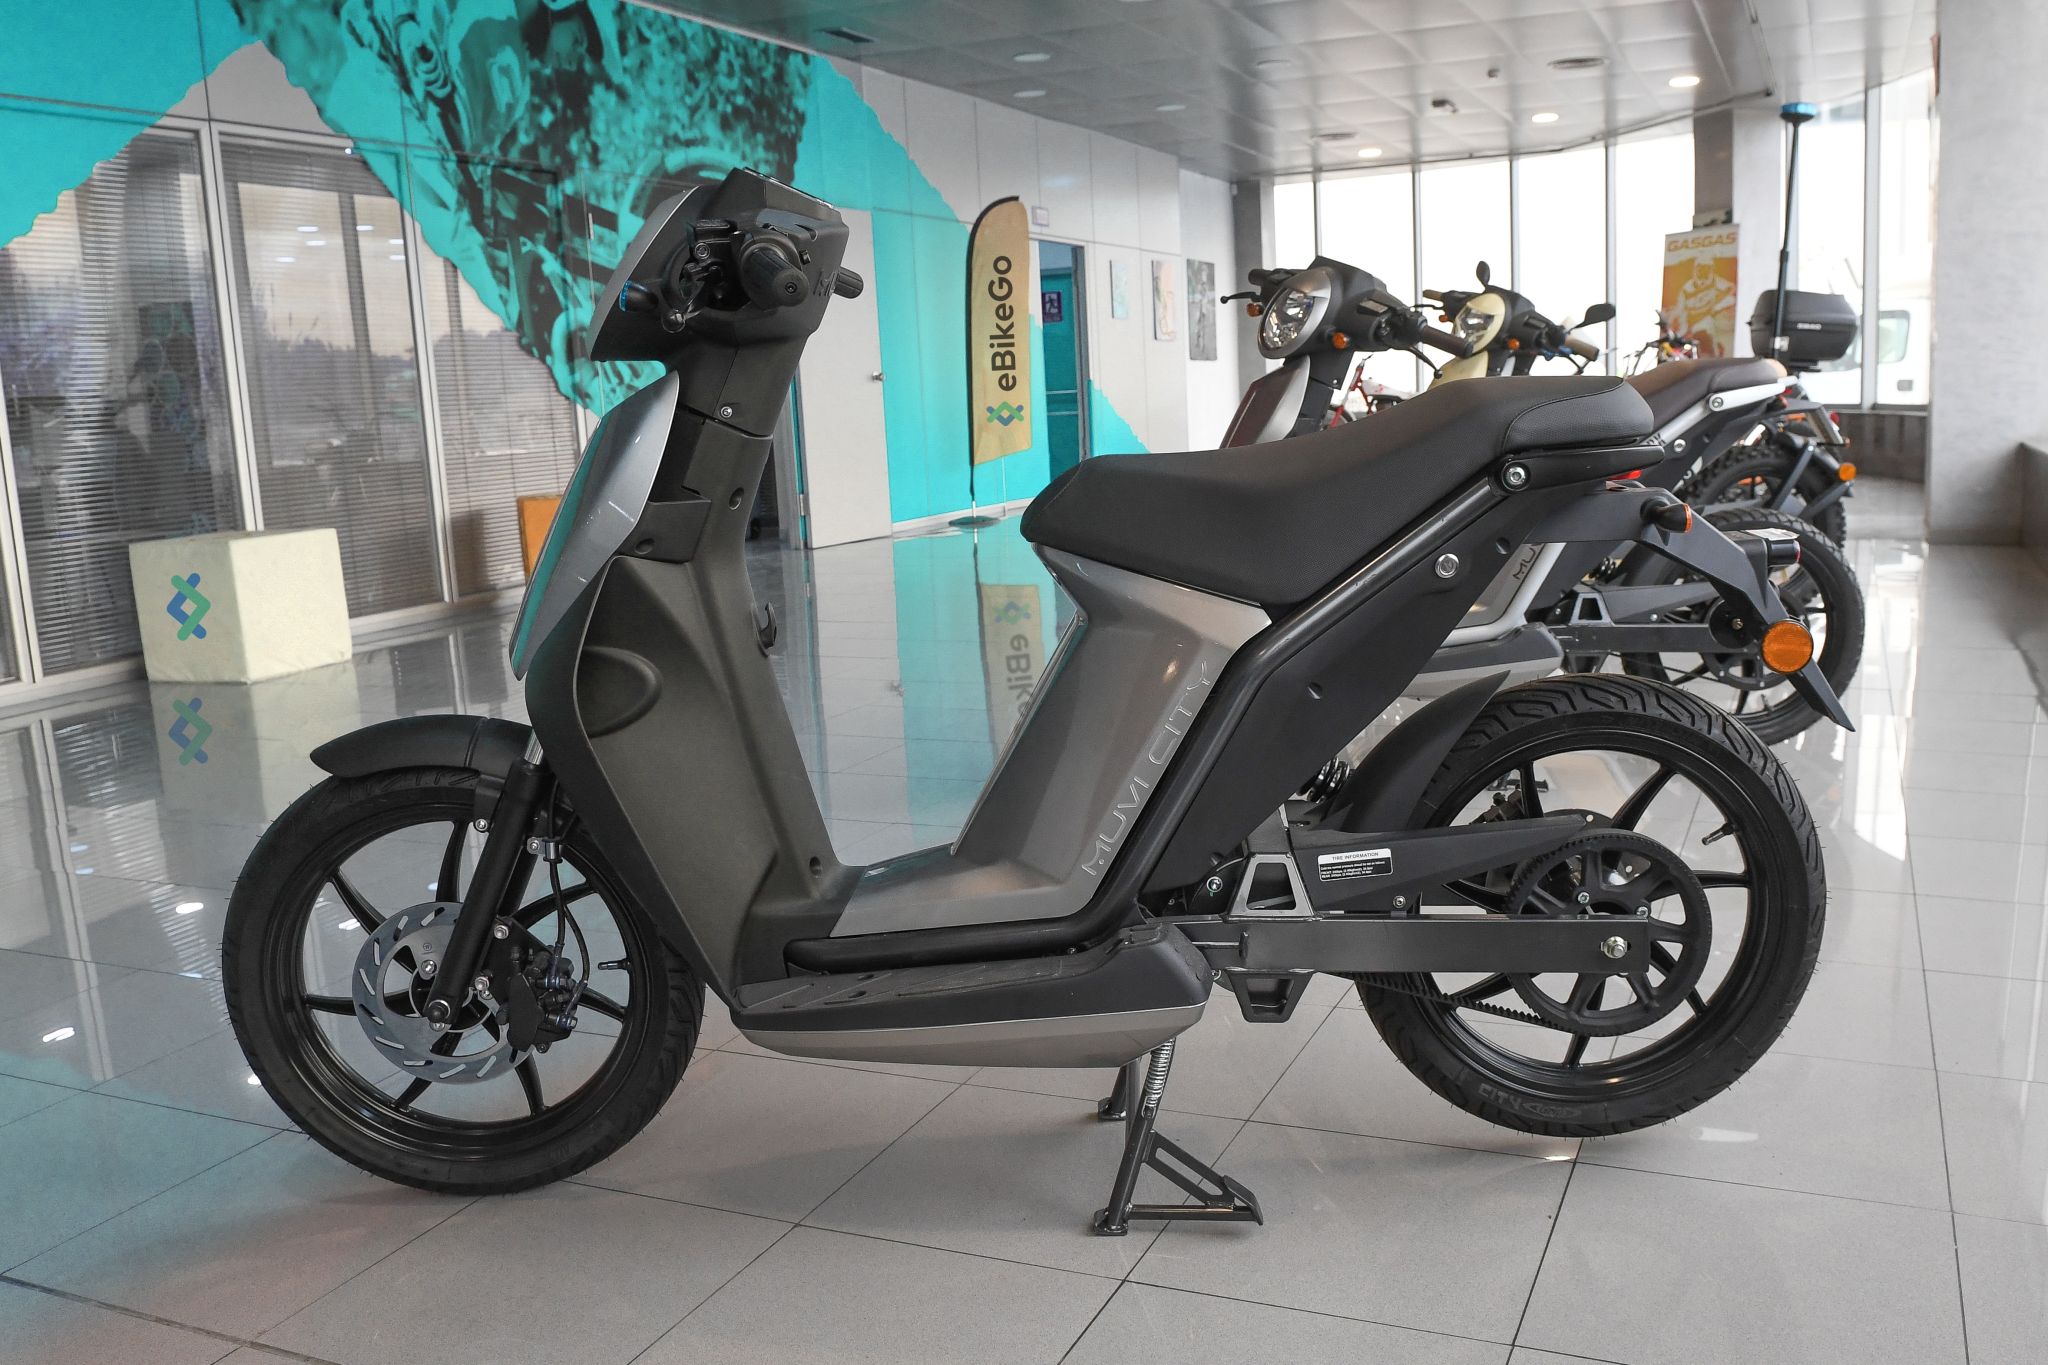 https://e-vehicleinfo.com/new-ebikego-muvi-e-scooter-with-16-inch-alloy-wheel/